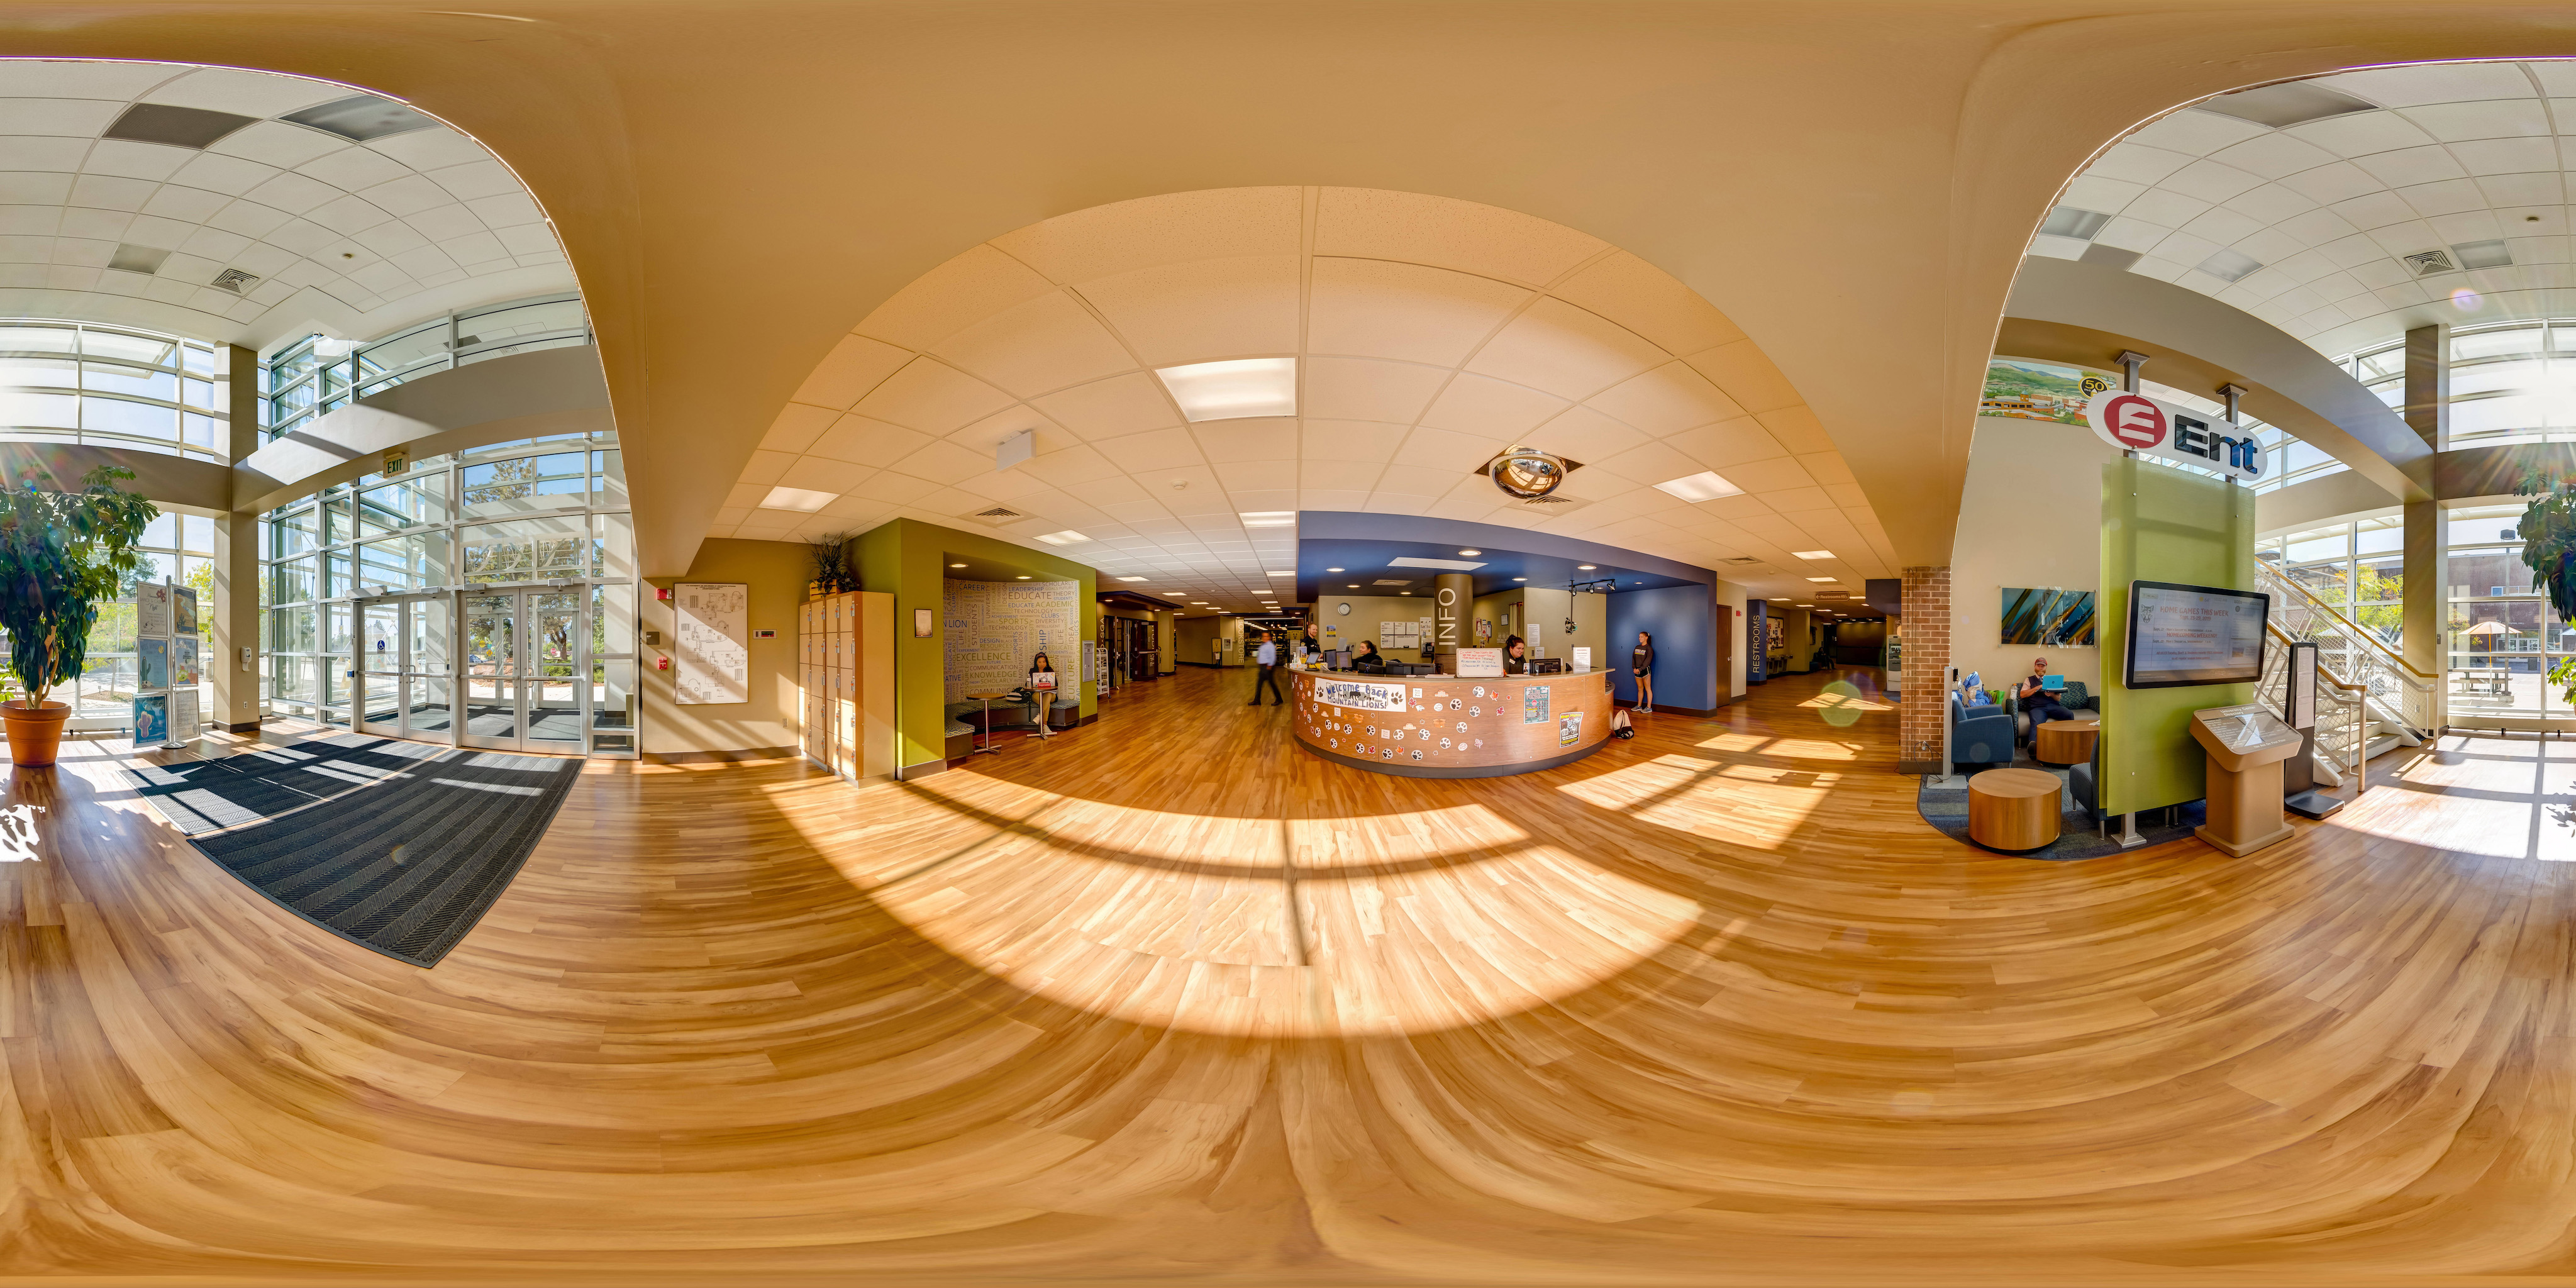 360 degree photo of the UCCS Help Desk inside the University Center